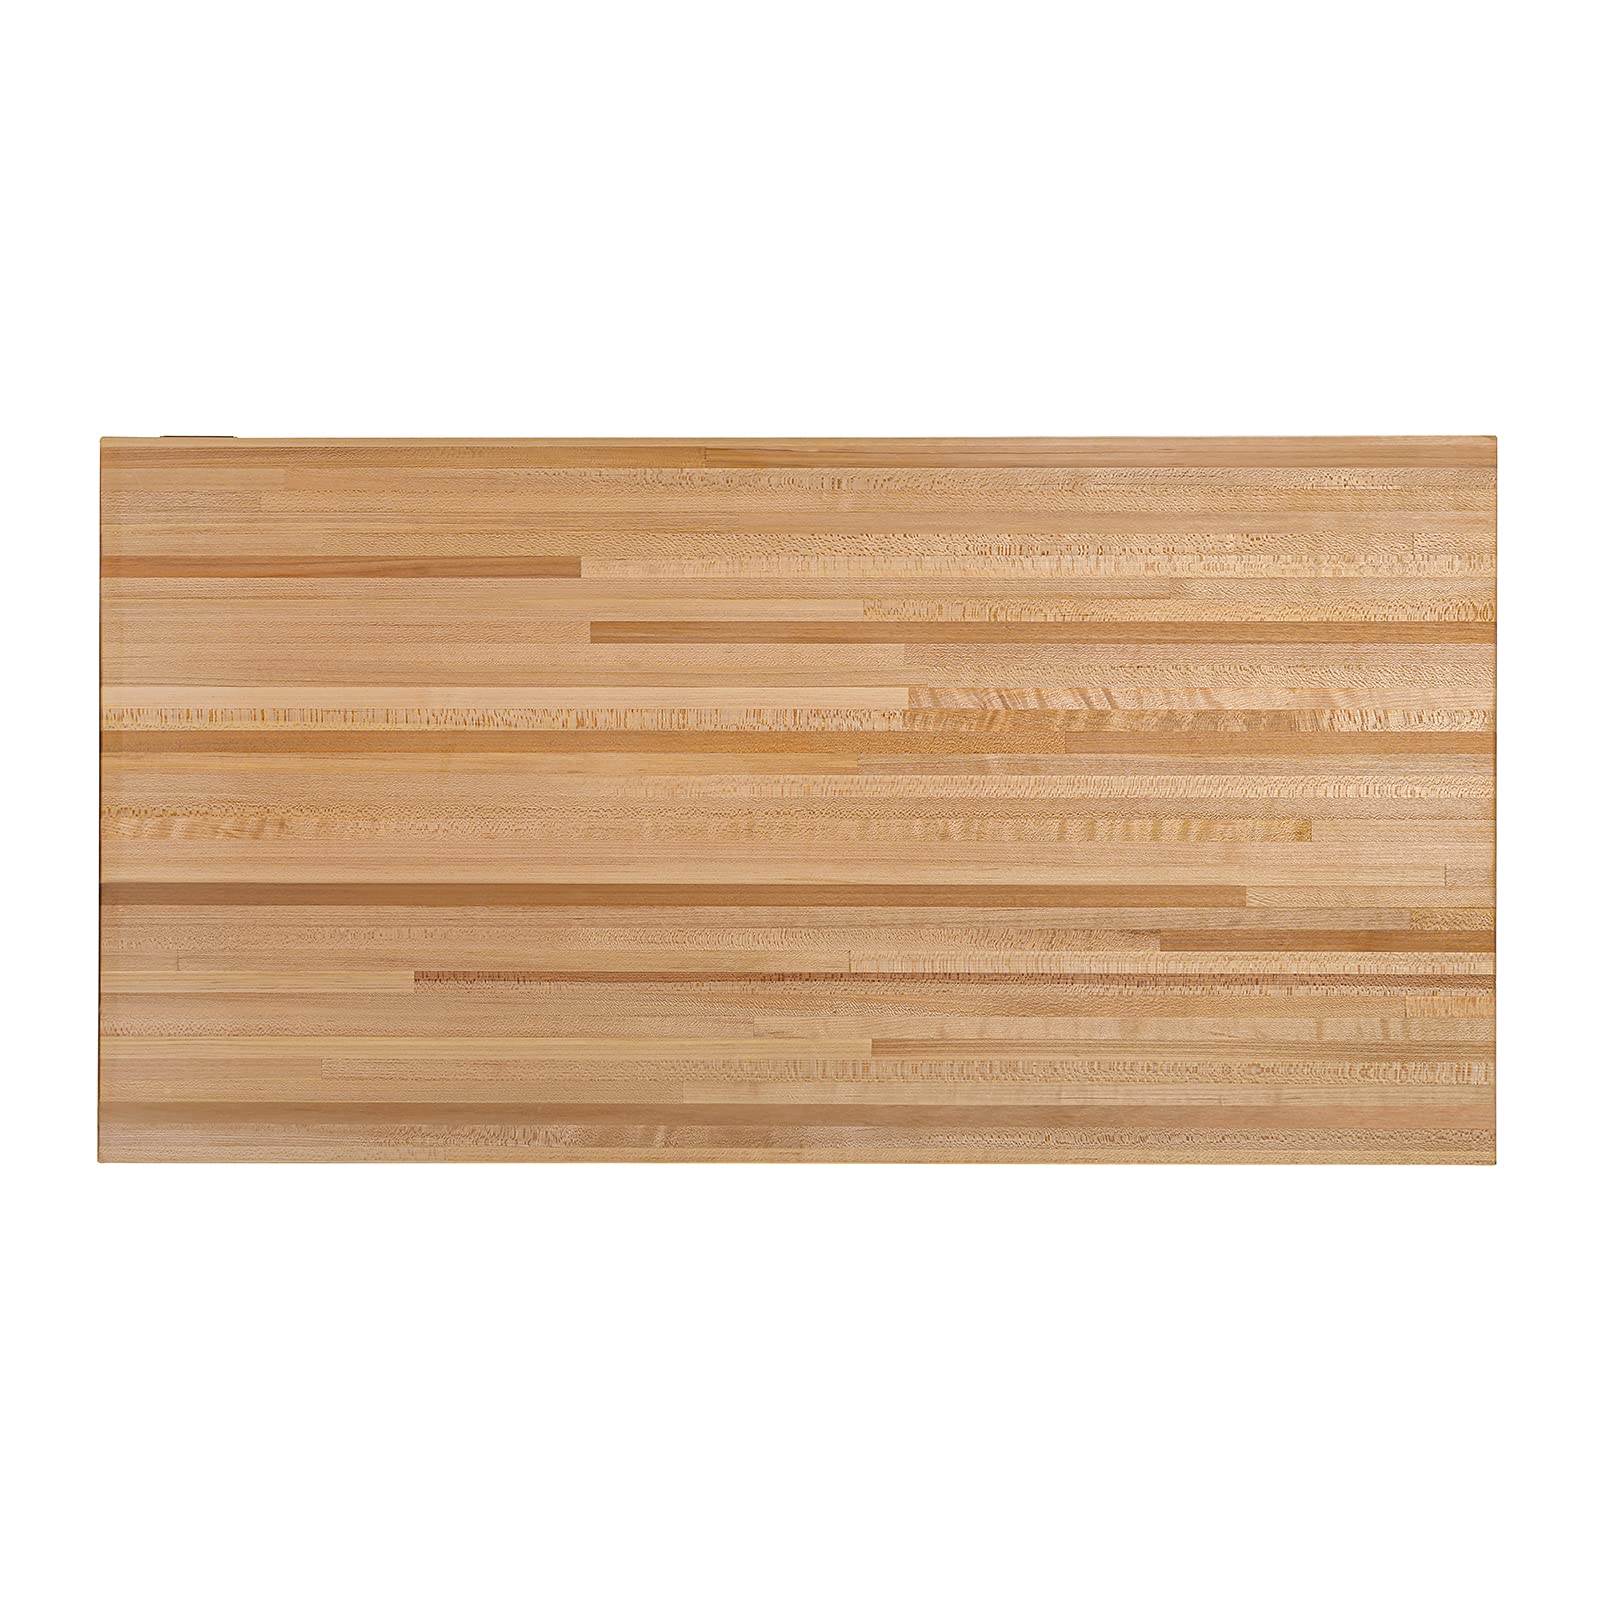 cONSDAN Butcher Block counter Top, USA grown Hard Maple Solid Hardwood countertop, WasherLaundry countertop, Table Top, Polished